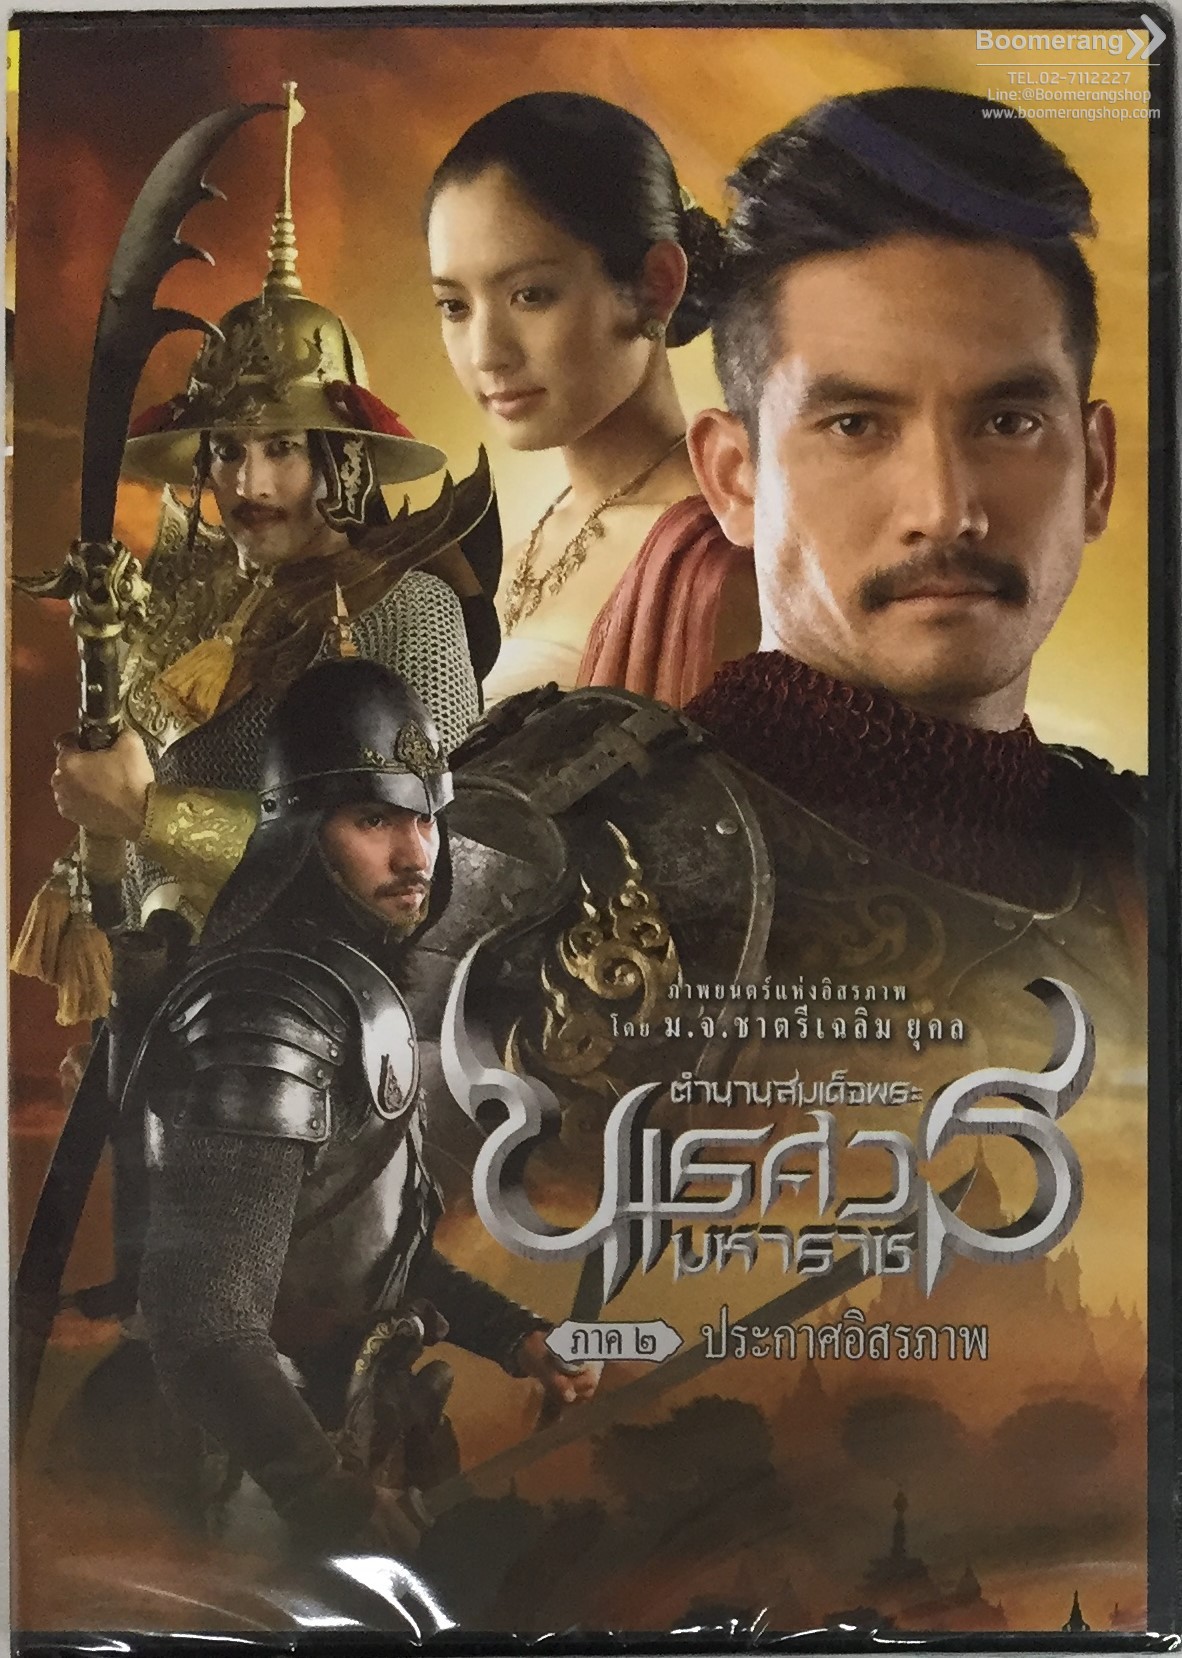 king naresuan 4 dvd